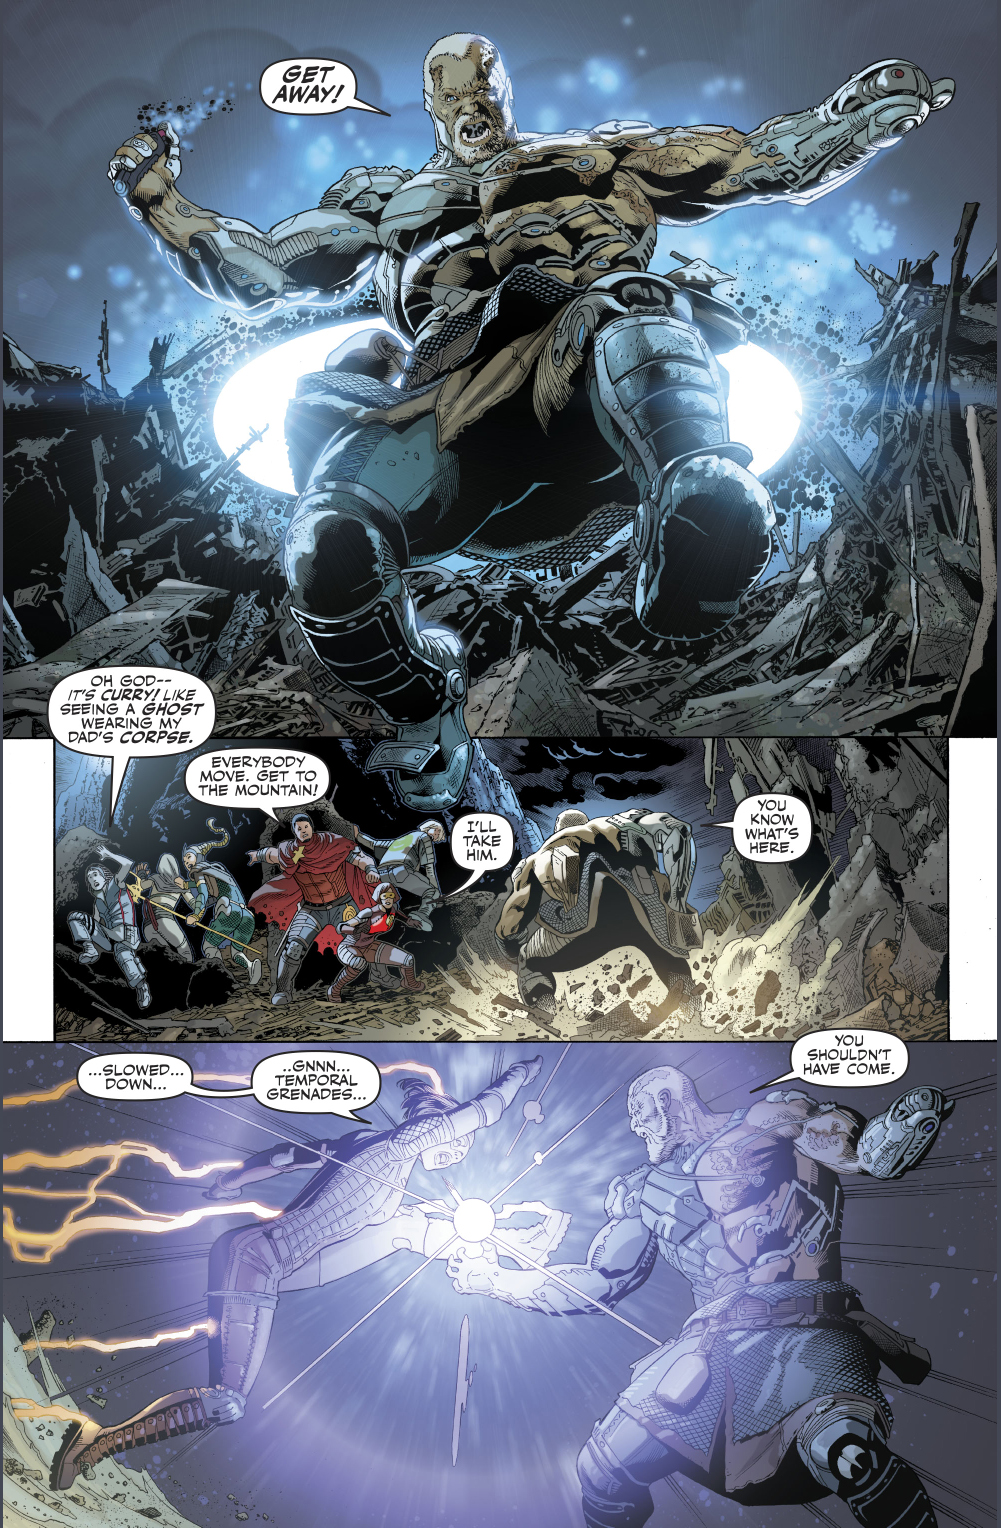 Cyborg Aquaman VS Justice League's Children 